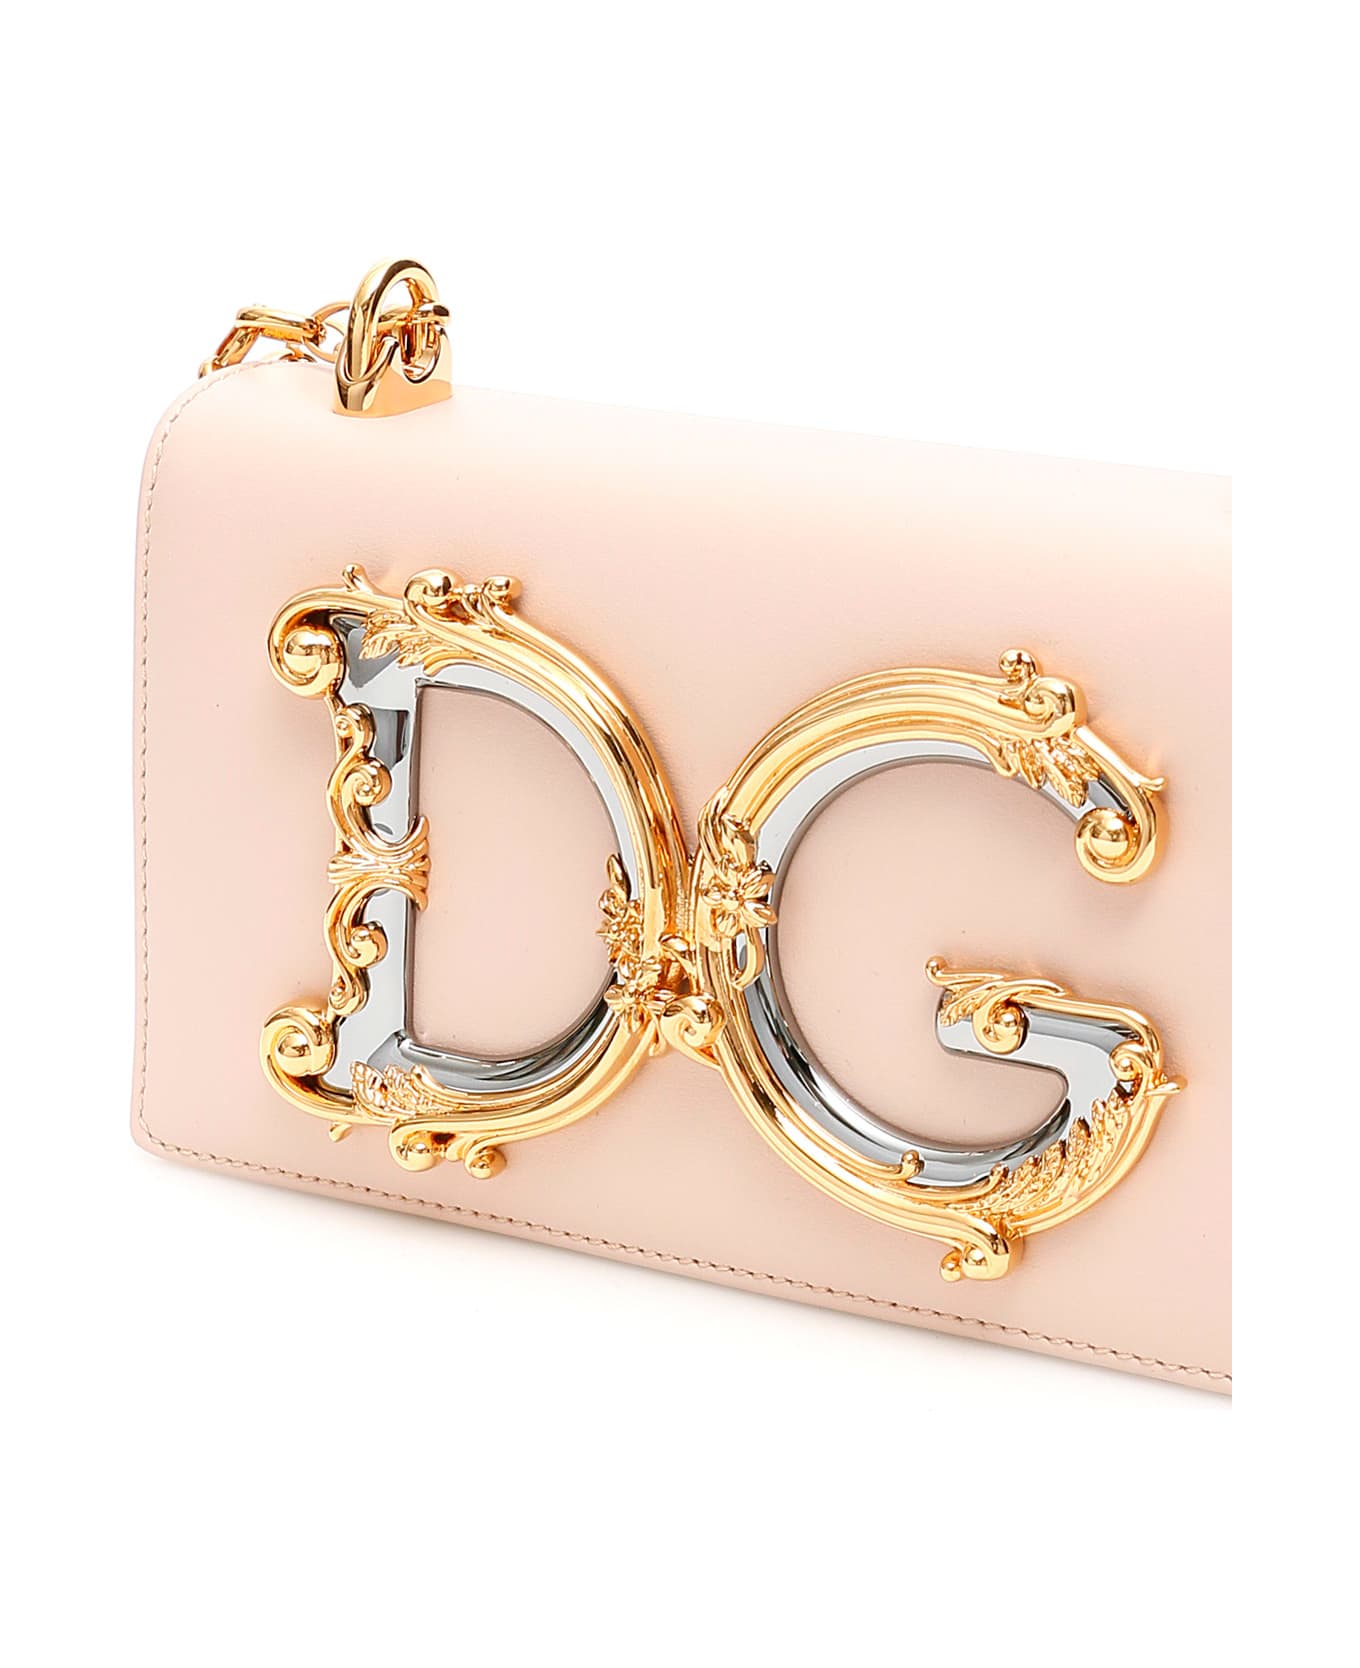 Dolce & Gabbana Dg Girl Mini Crossbody Bag - CIPRIA 1 (Pink)